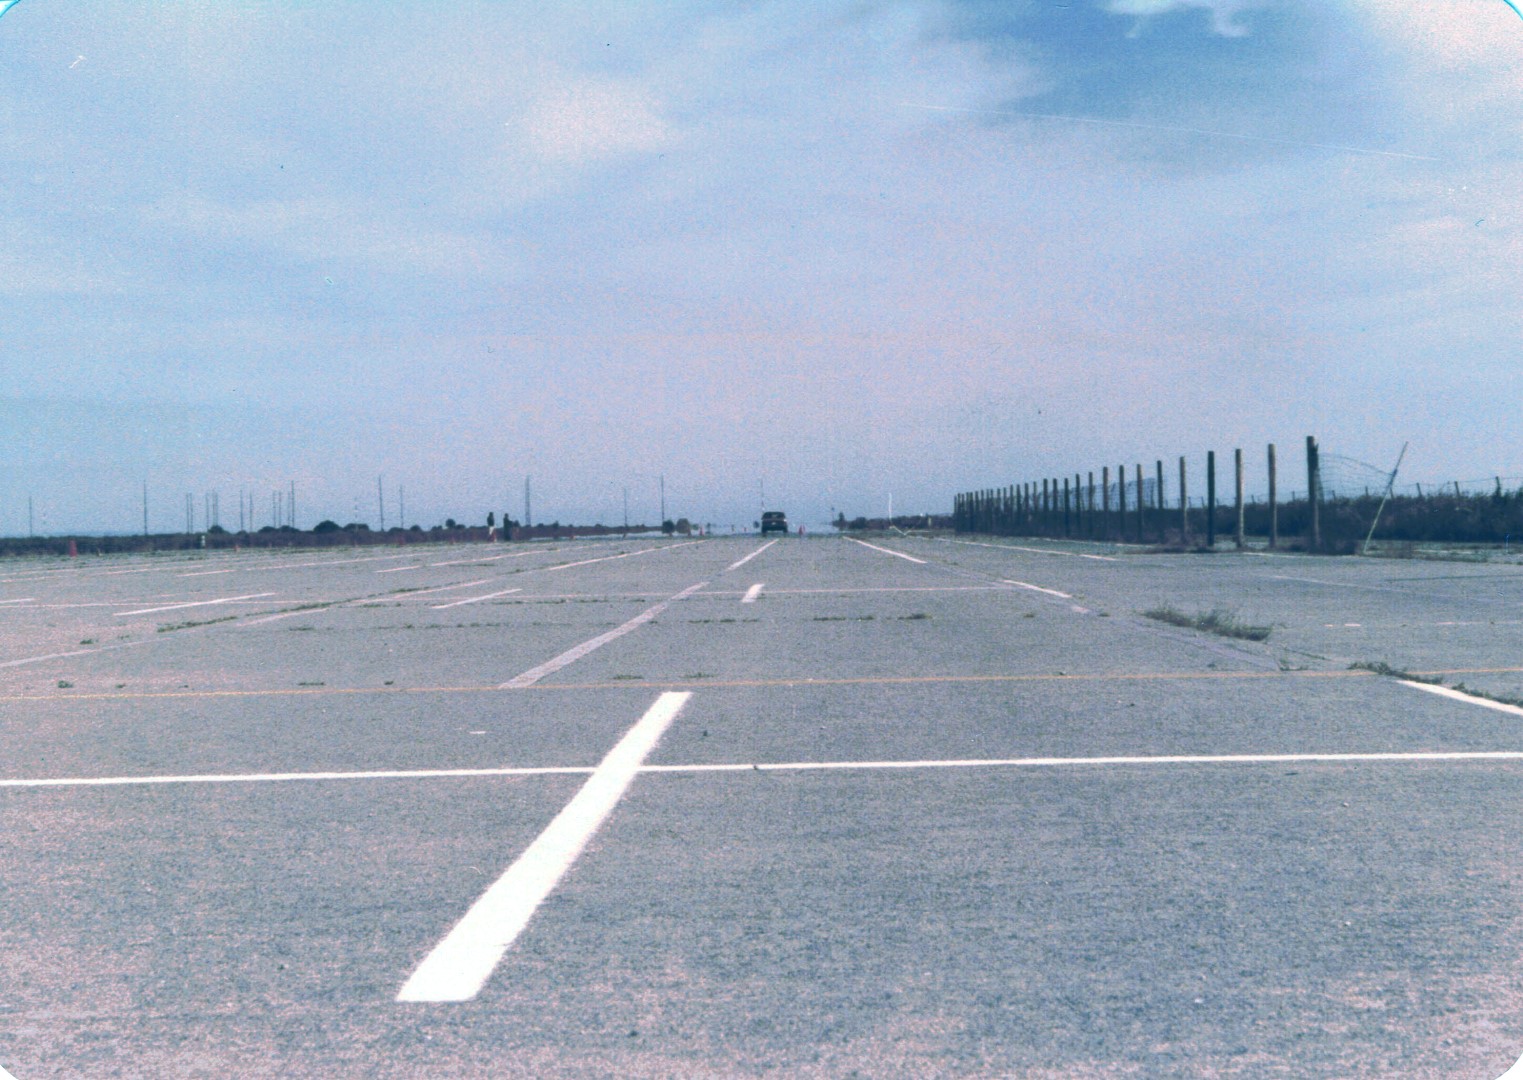 Using the full length of Boundary Bay, Circa 1977